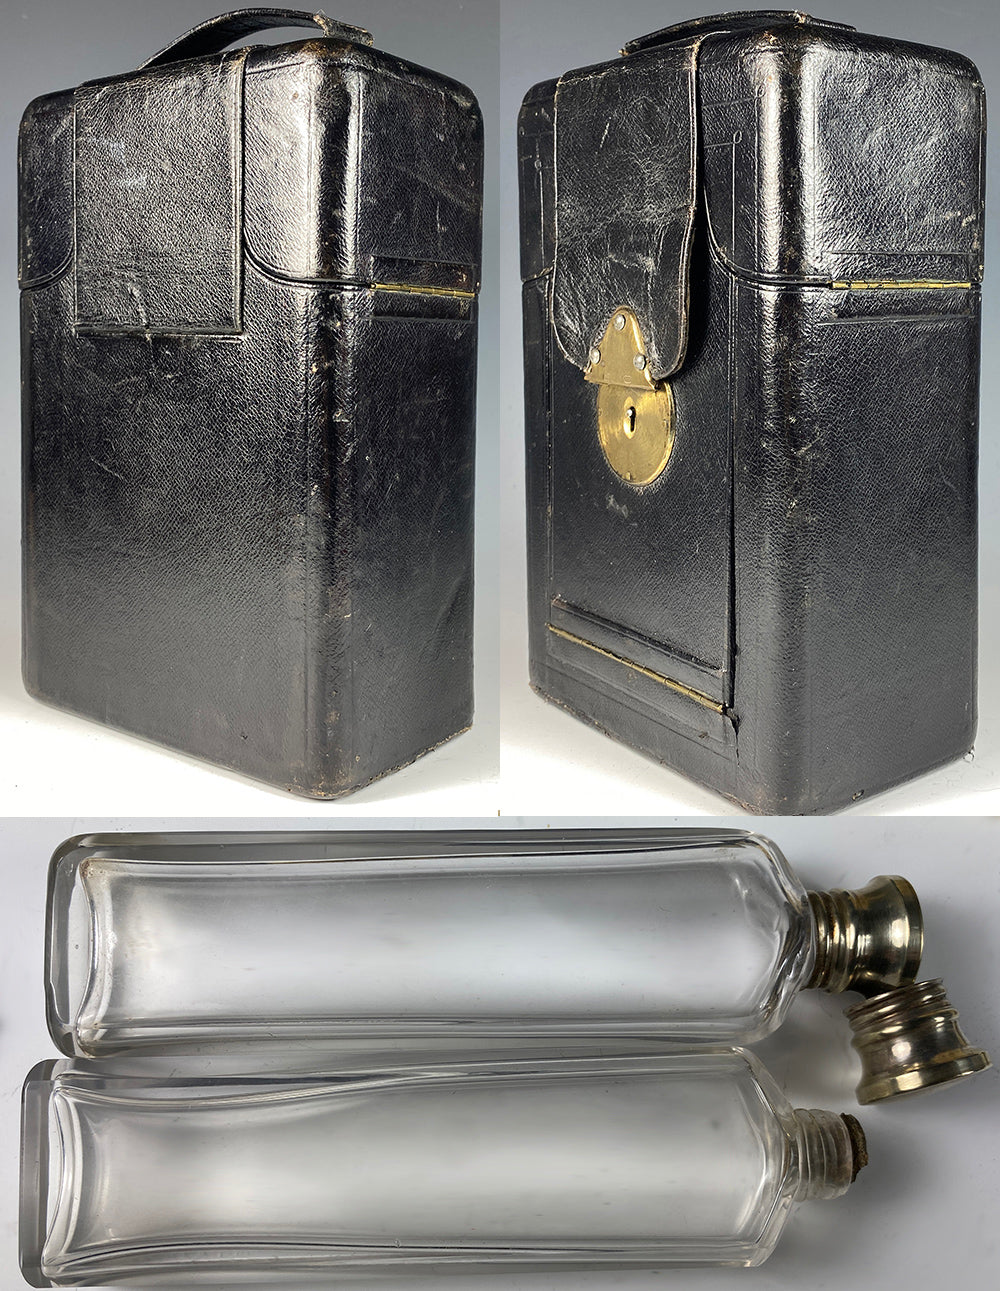 Antique French Trousse de Voyage, Travel Vanity Case, Perfumes, Razors, Many Tools in Ivory